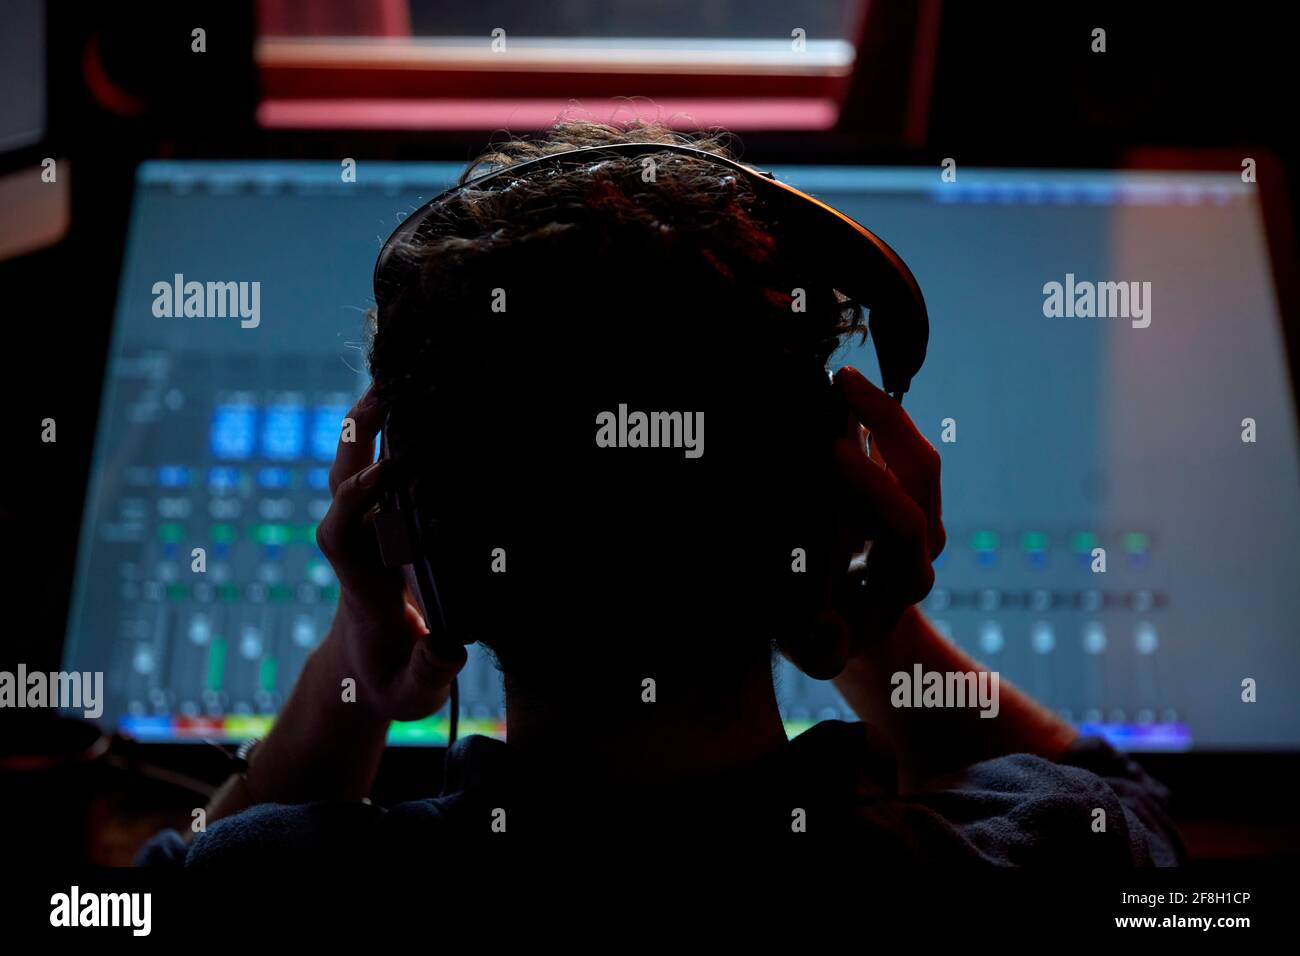 Man working in music studio wearing headphones using large computer screen shot from behind Stock Photo